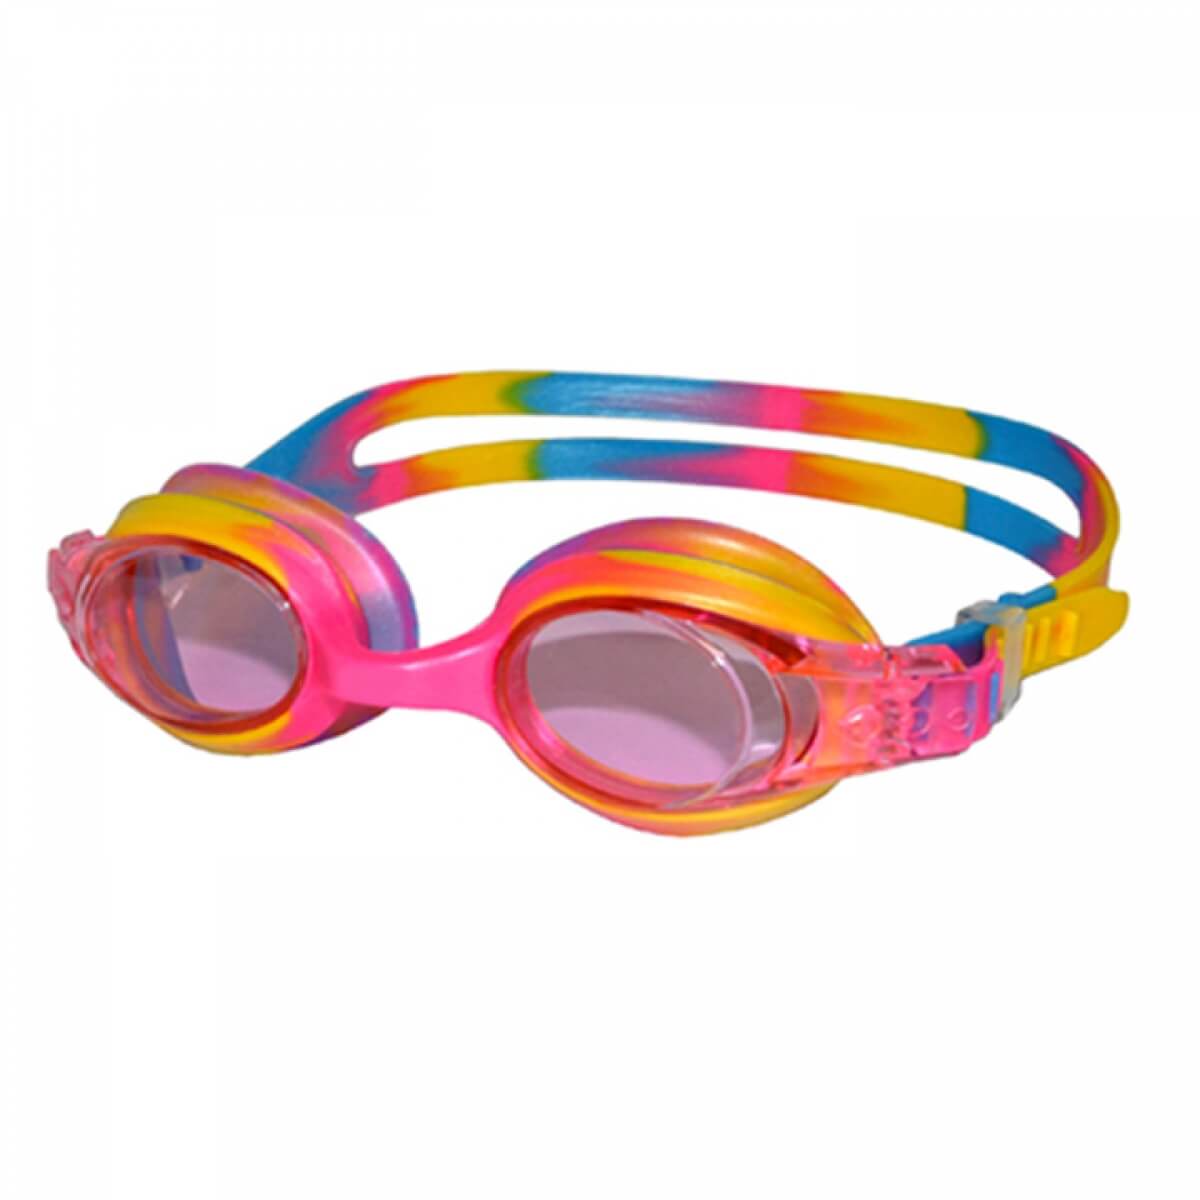 Marni svømmebrille til børn/junior